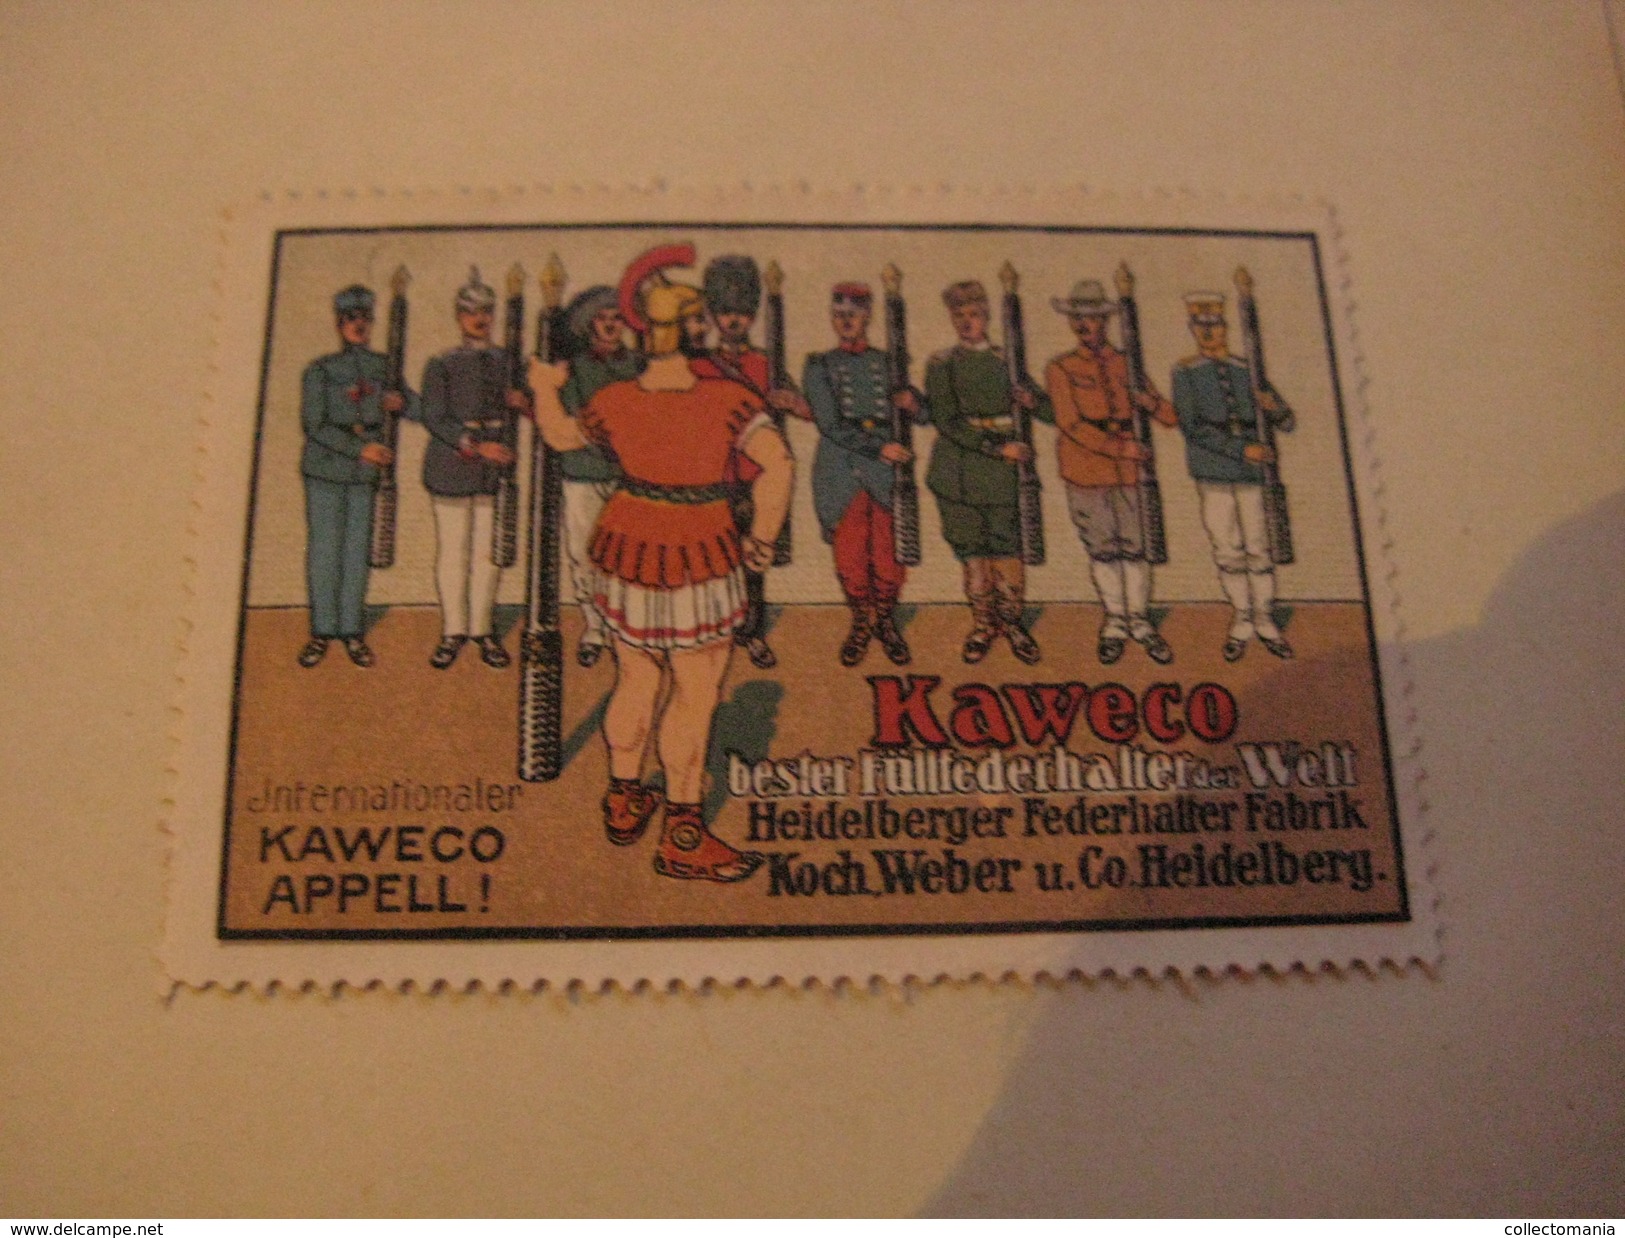 5 Poster Stamp Advertising KAWECO KO-MIO FULLBLEISTIFT FULLFEDERHALTER Koch Weber Heidelberg  Litho ART - Vignetten (Erinnophilie)